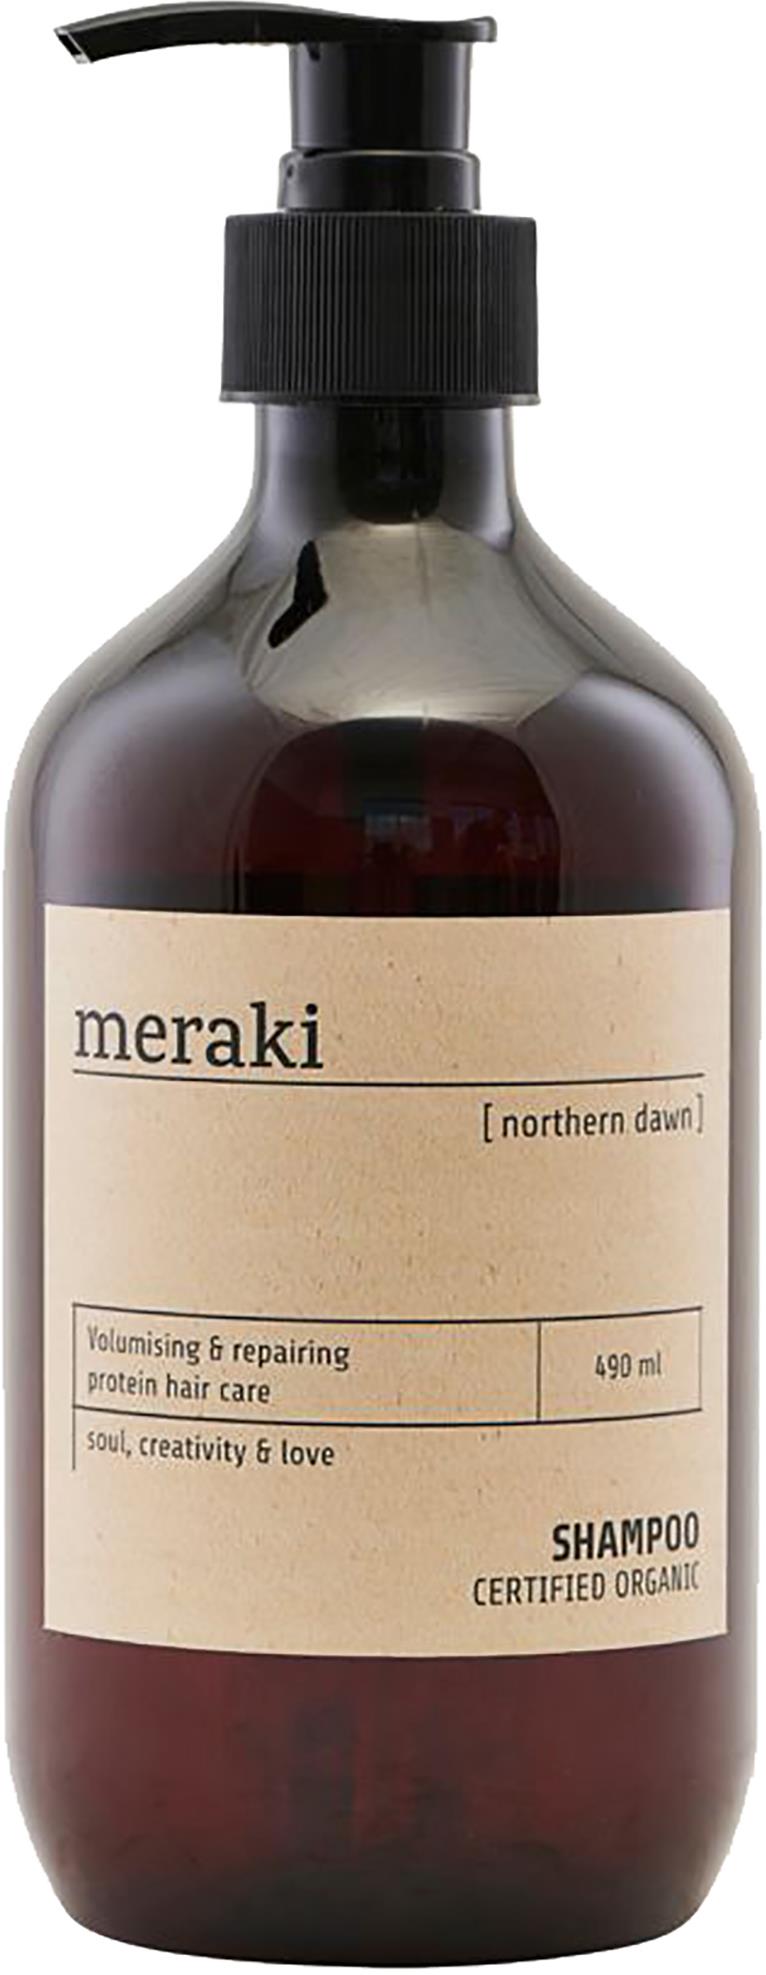 Meraki Northern Shampoo 490 ml | lyko.com